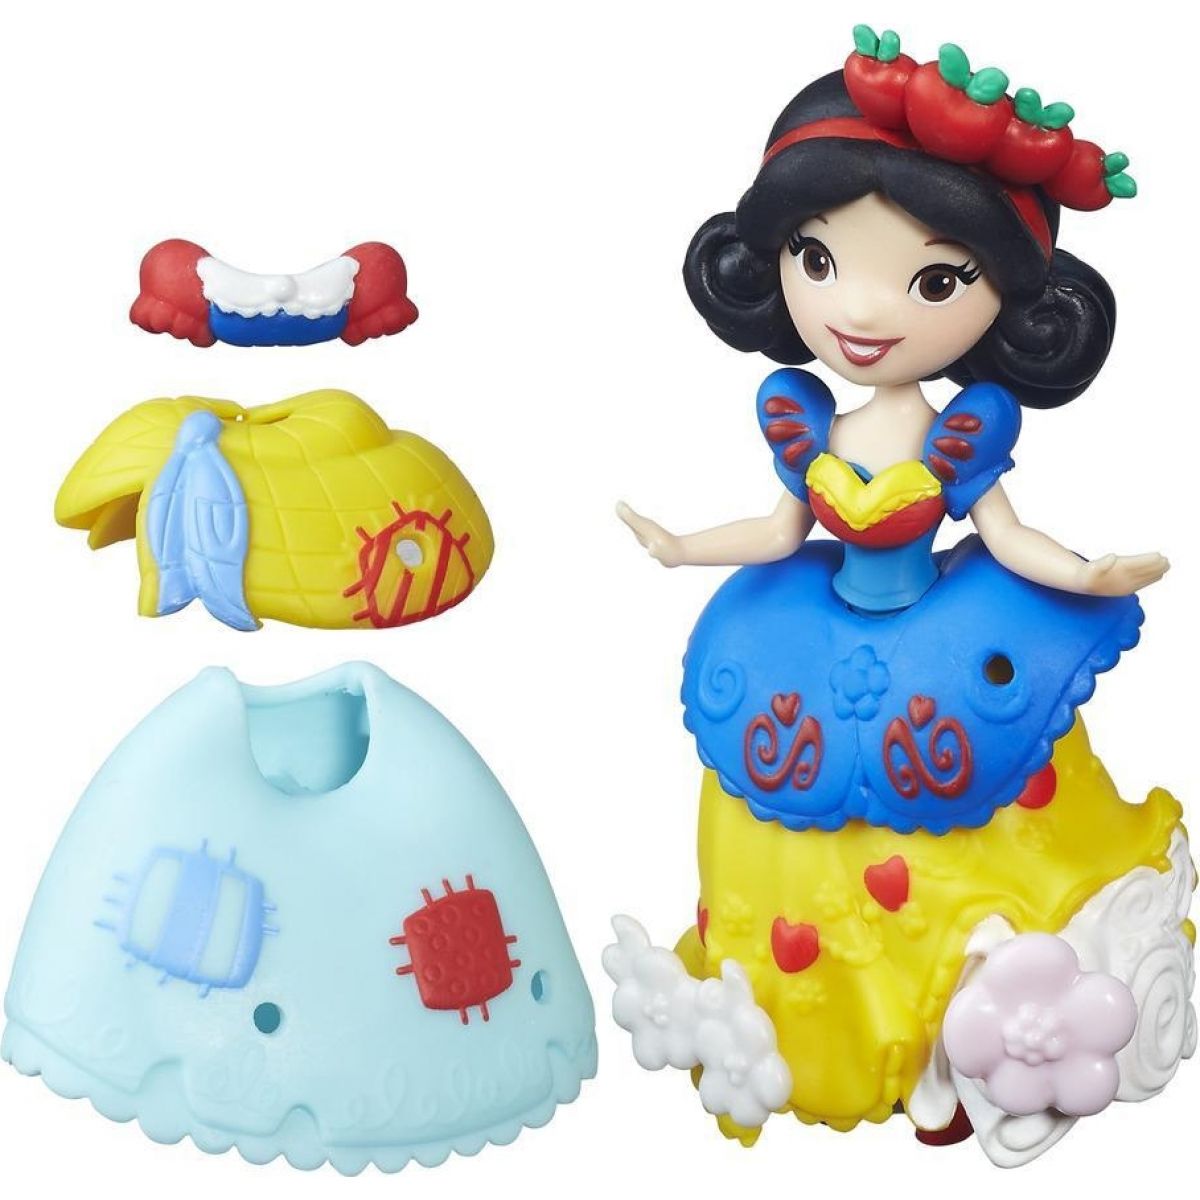 Hasbro Disney Princess Mini panenka s doplňky - Sněhurka